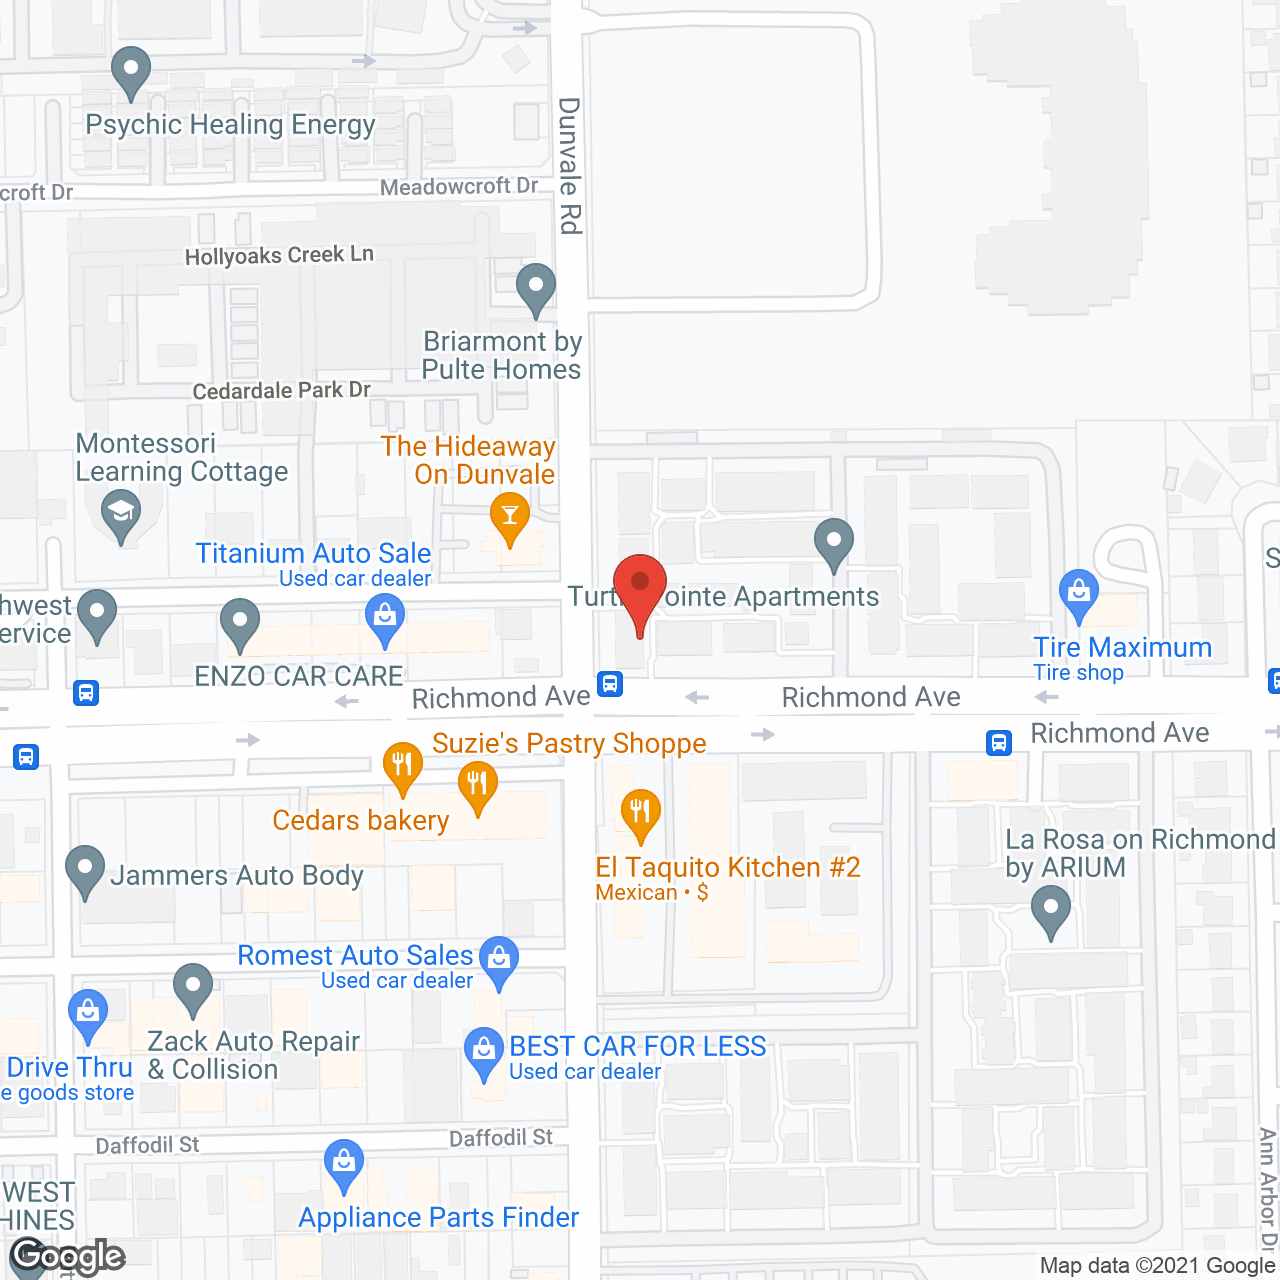 Houston - A Senior Moment 2 in google map